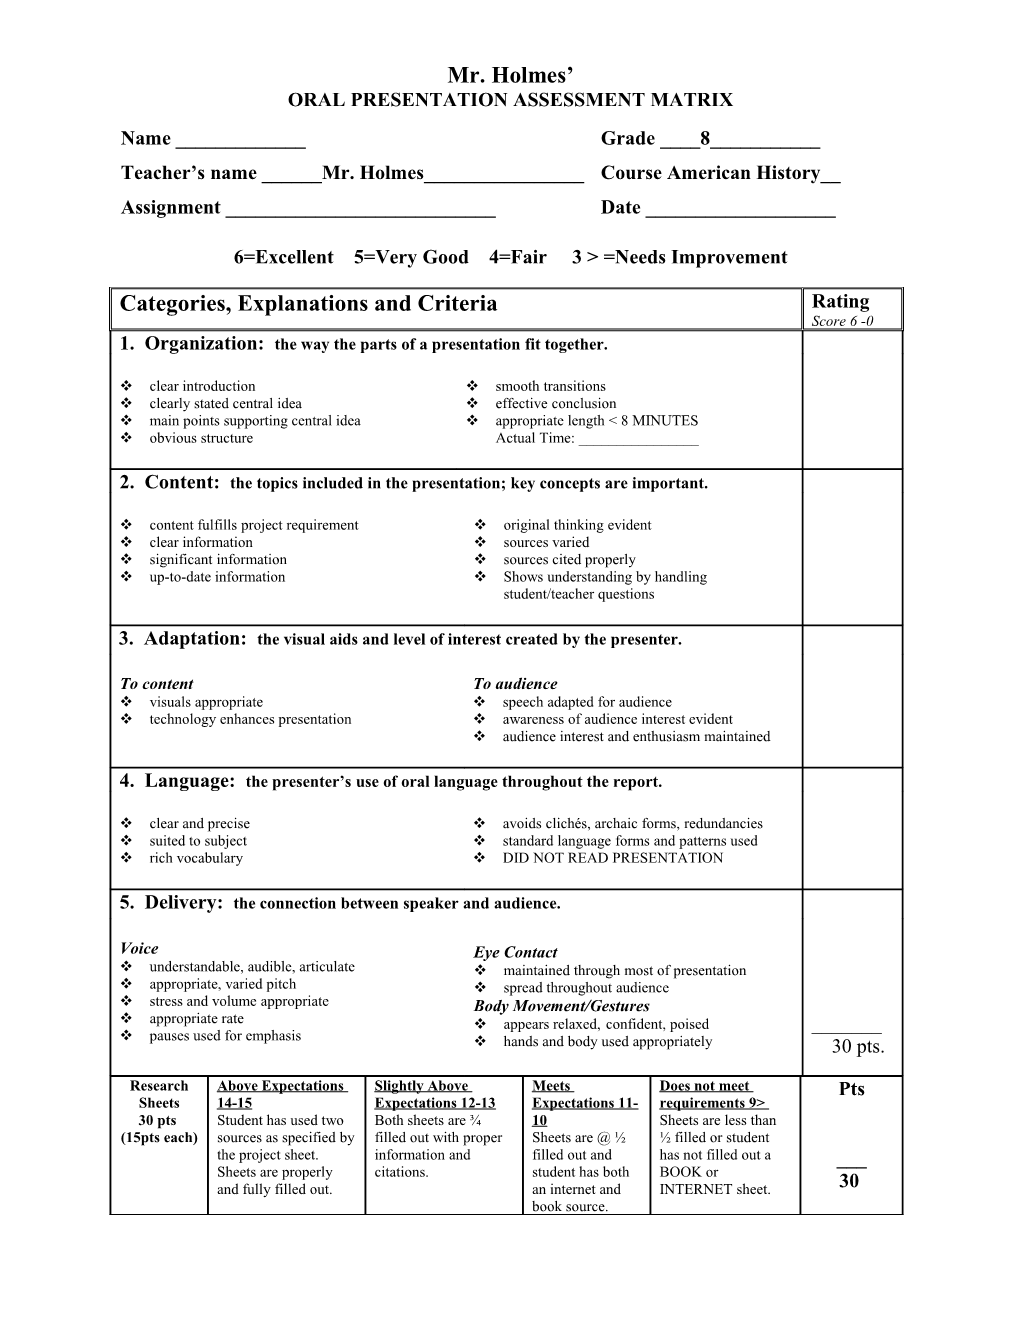 Oral Presentation Assessment Matrix